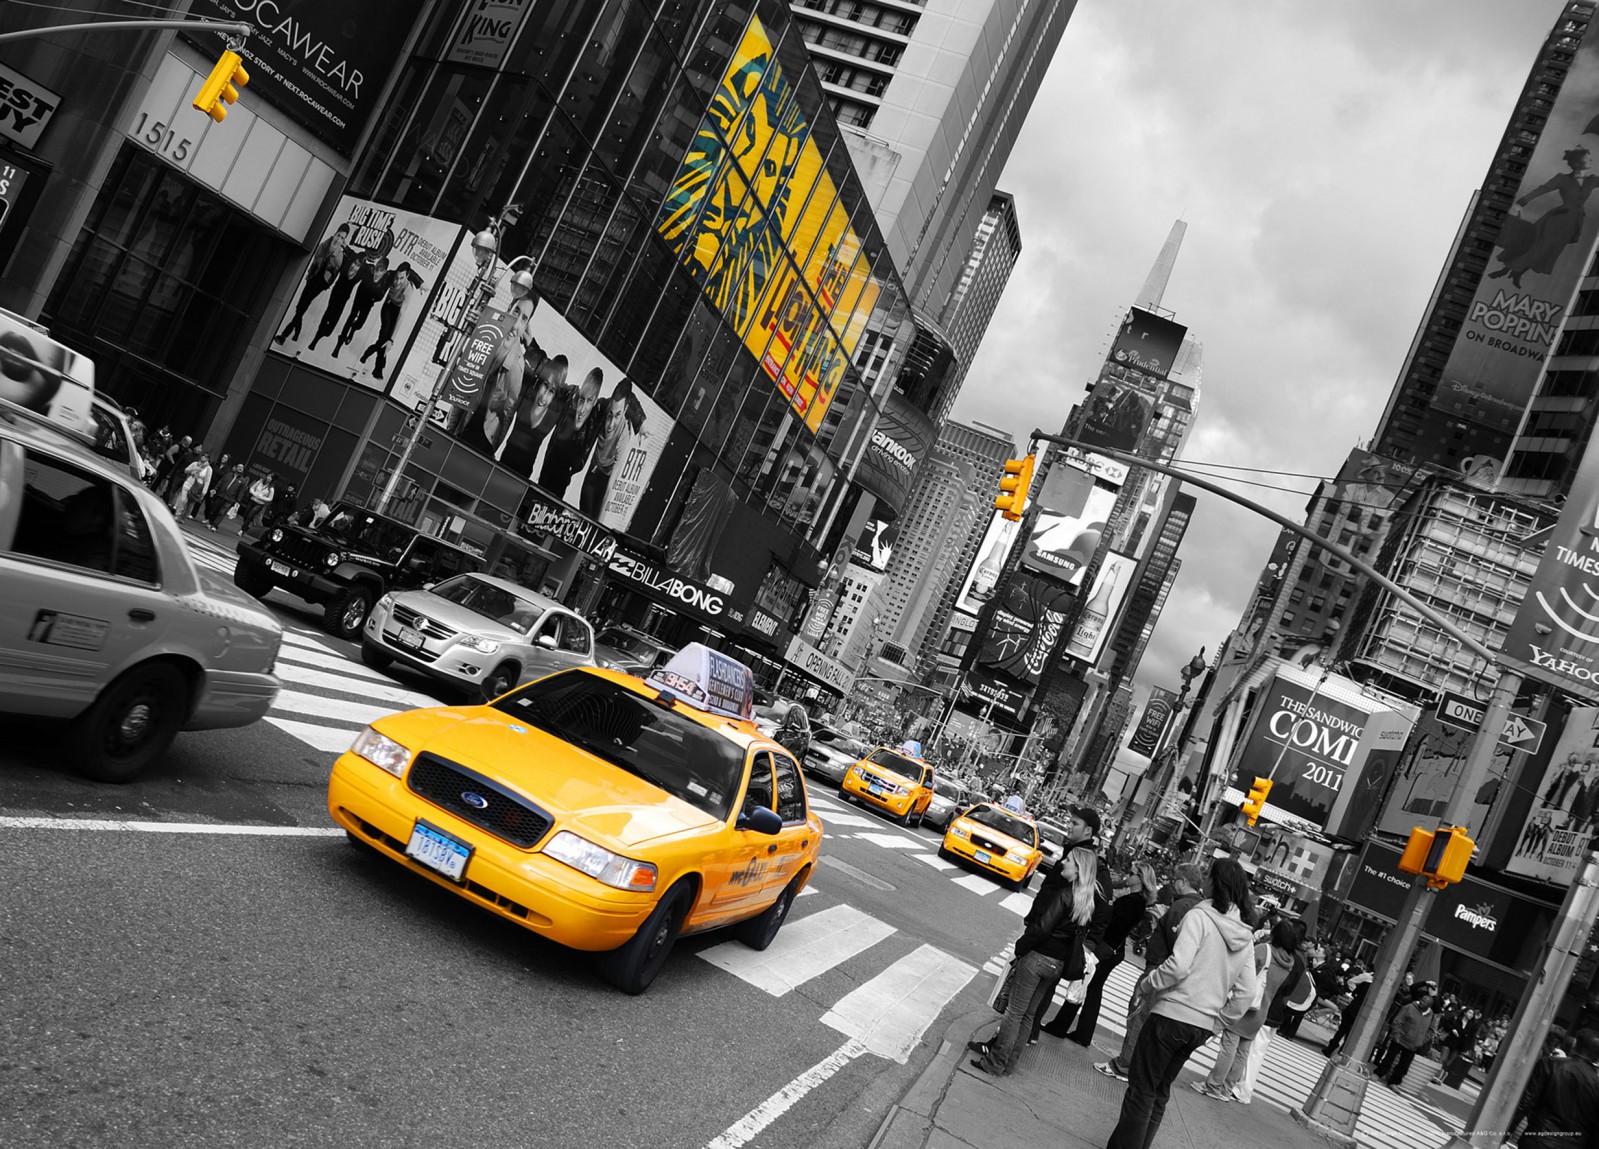 Photo Wallpaper Mural Poster New York Taxi 160x115cm